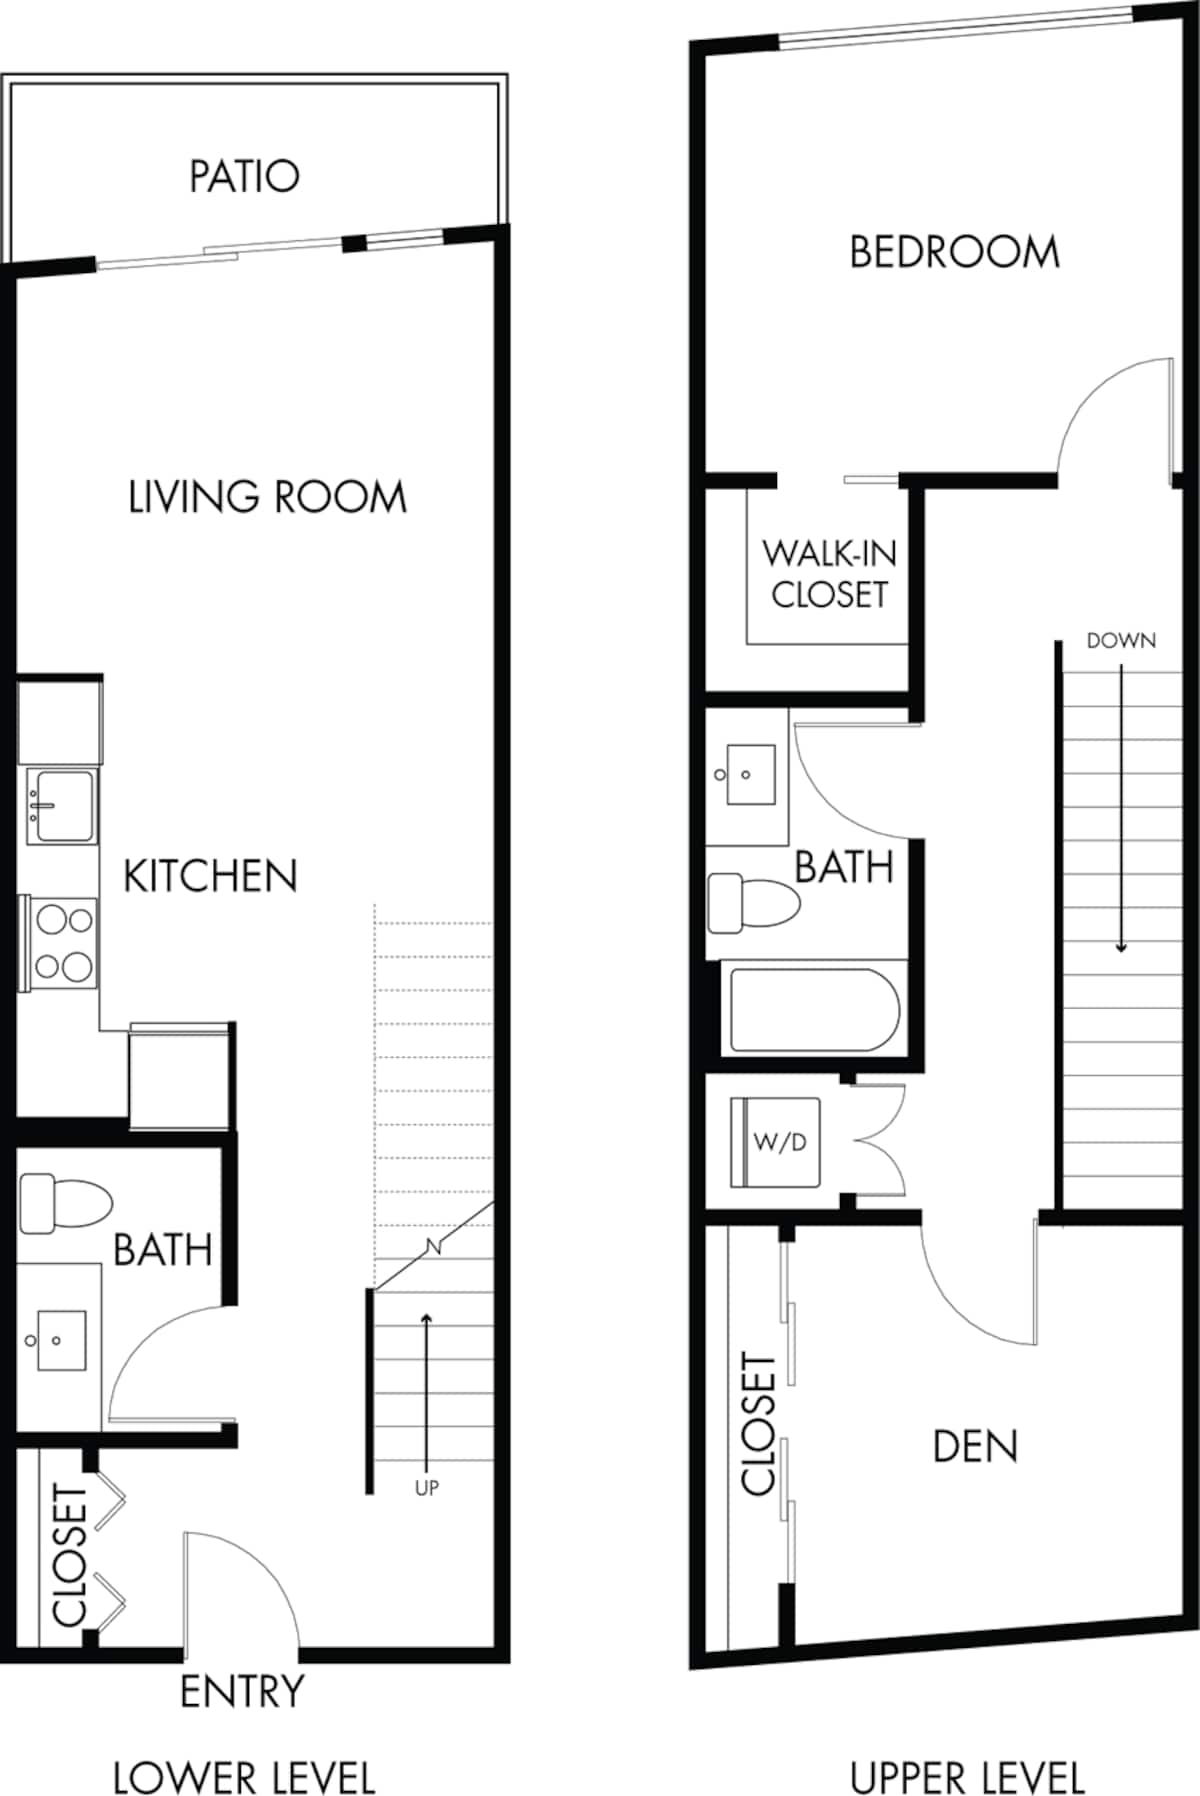 Floorplan diagram for TH.9, showing 1 bedroom